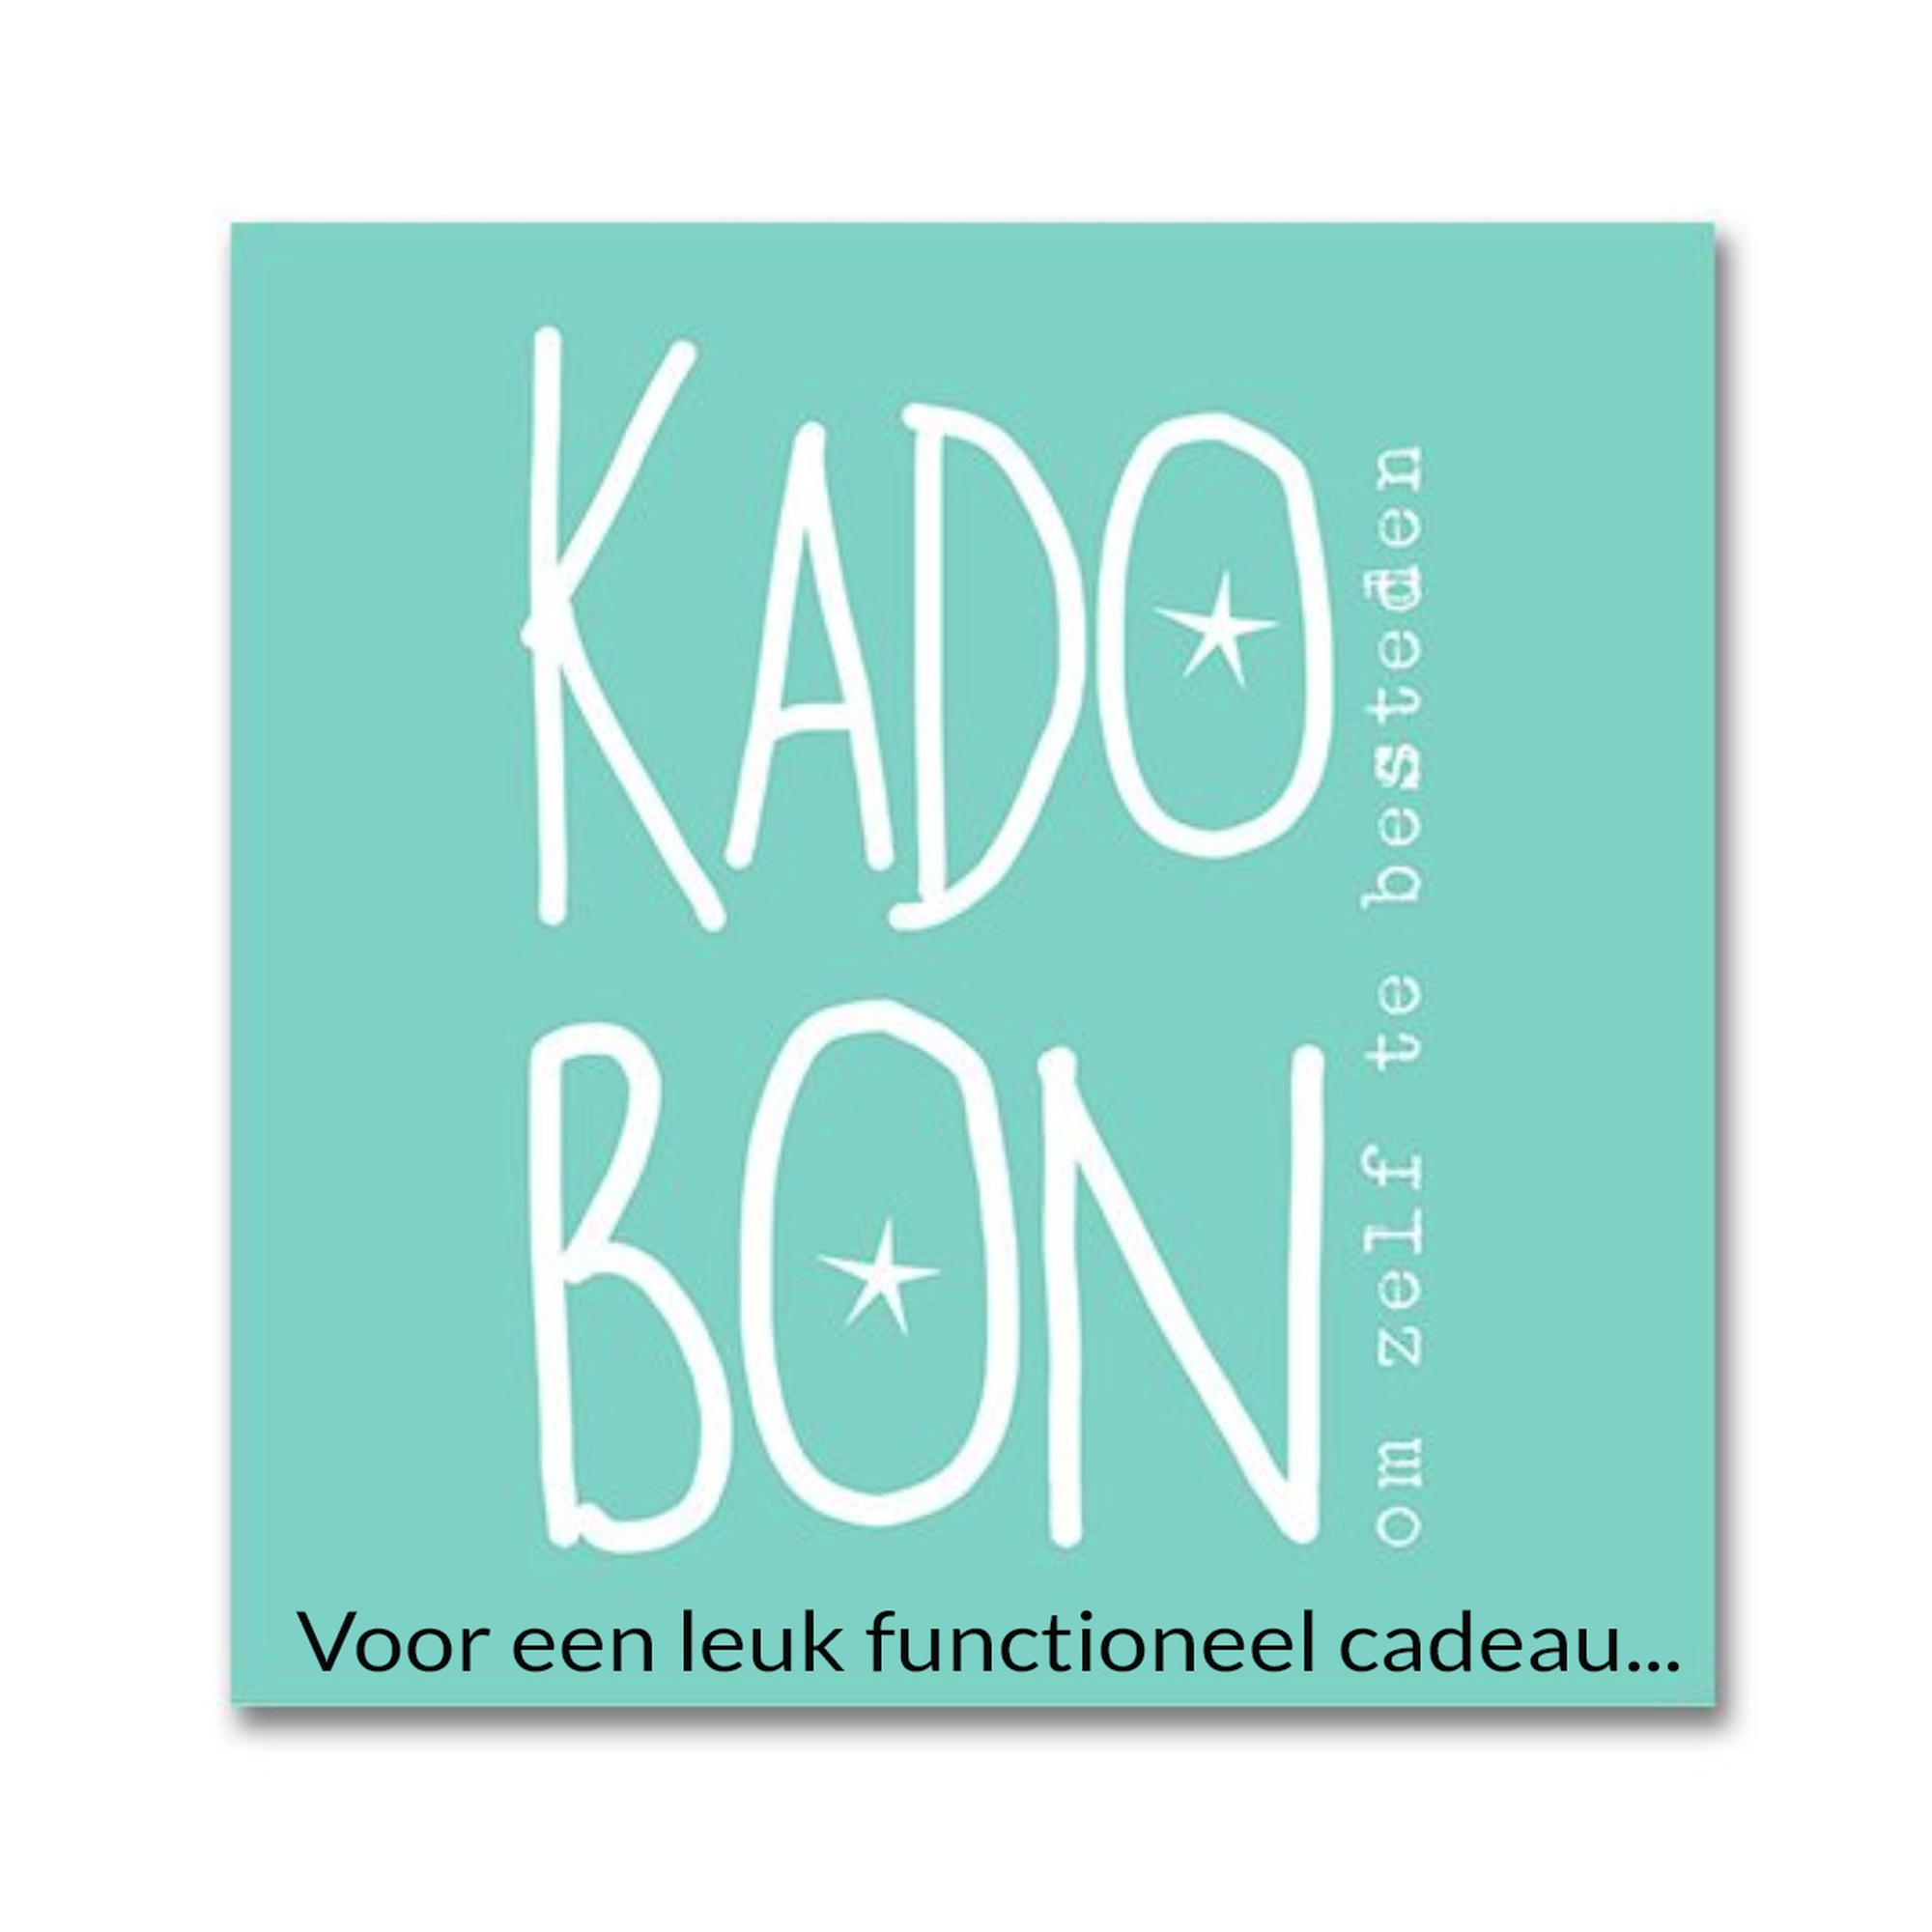 Steenwijk Schoenmode Kadobon Eur 15,00